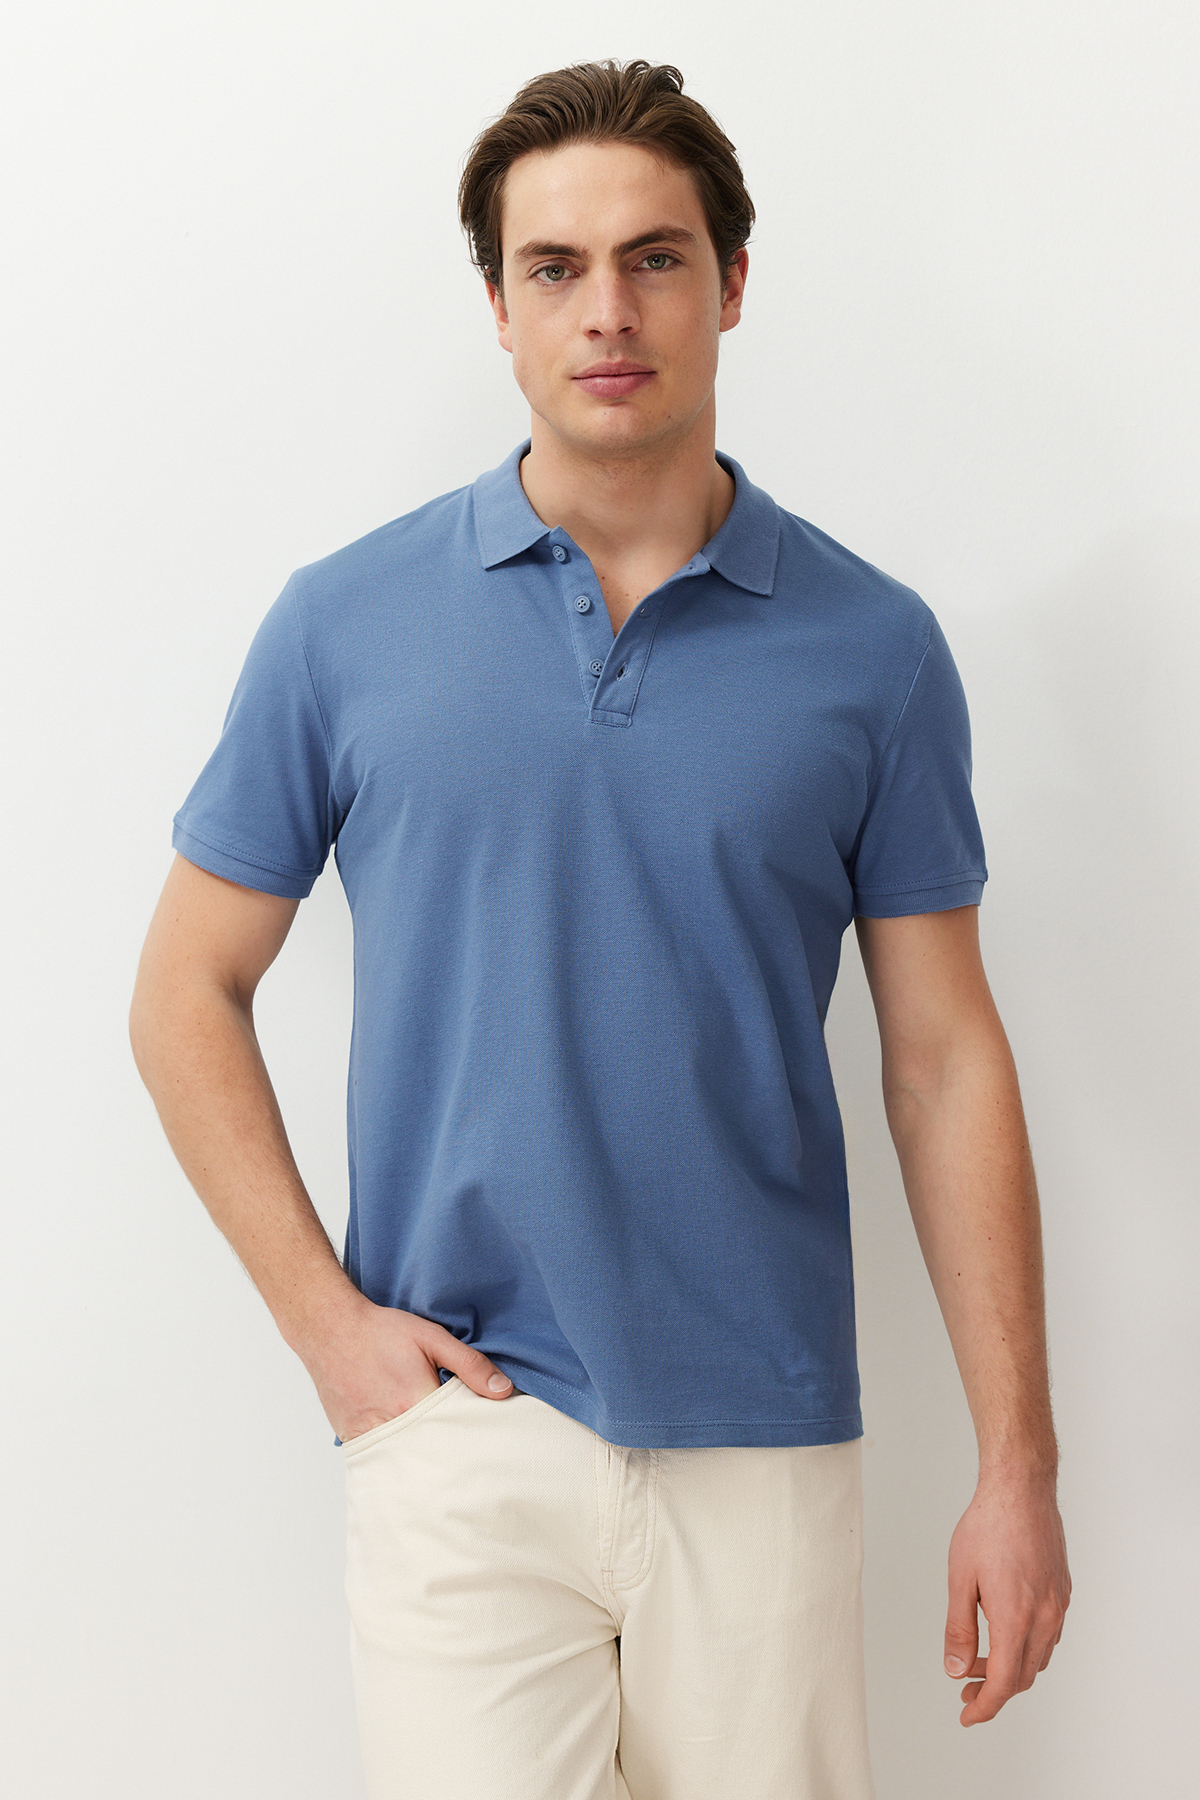 Trendyol Indigo Regular/Normal Cut Textured Polo Collar T-Shirt